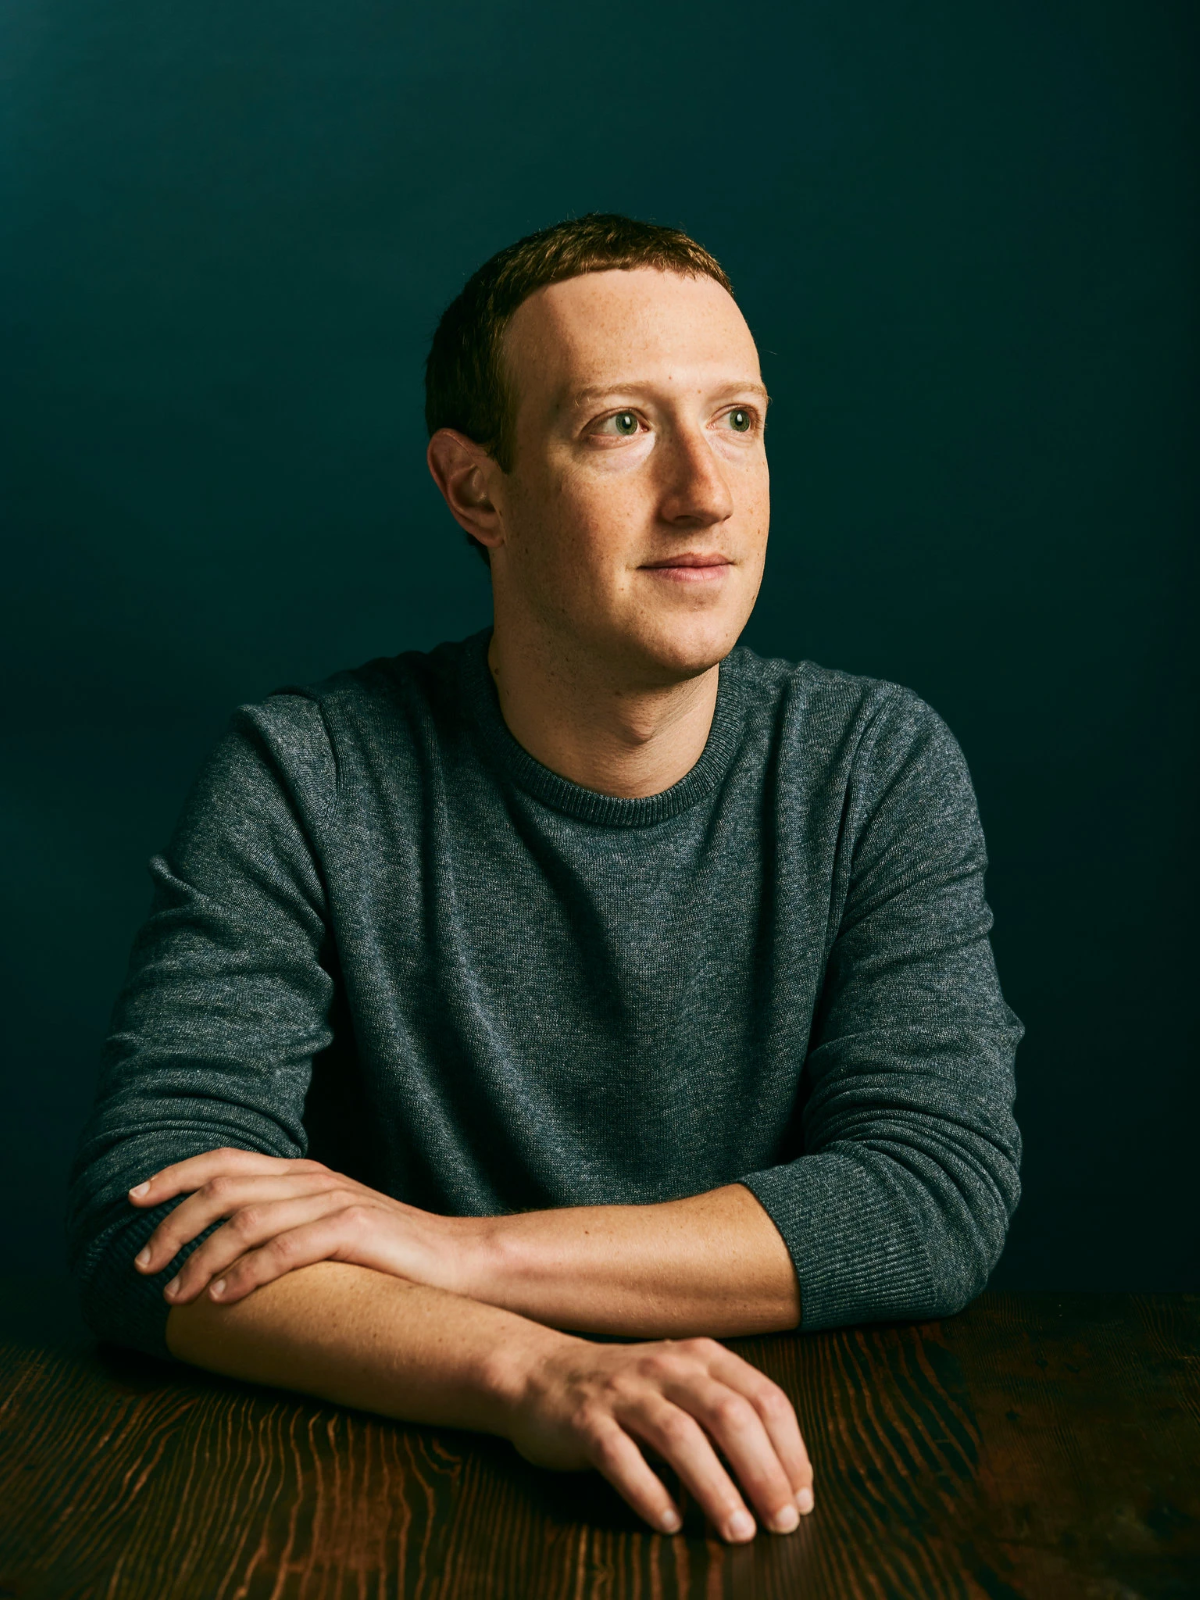 Chief Executive Officer of Facebook, Mark Zuckerberg